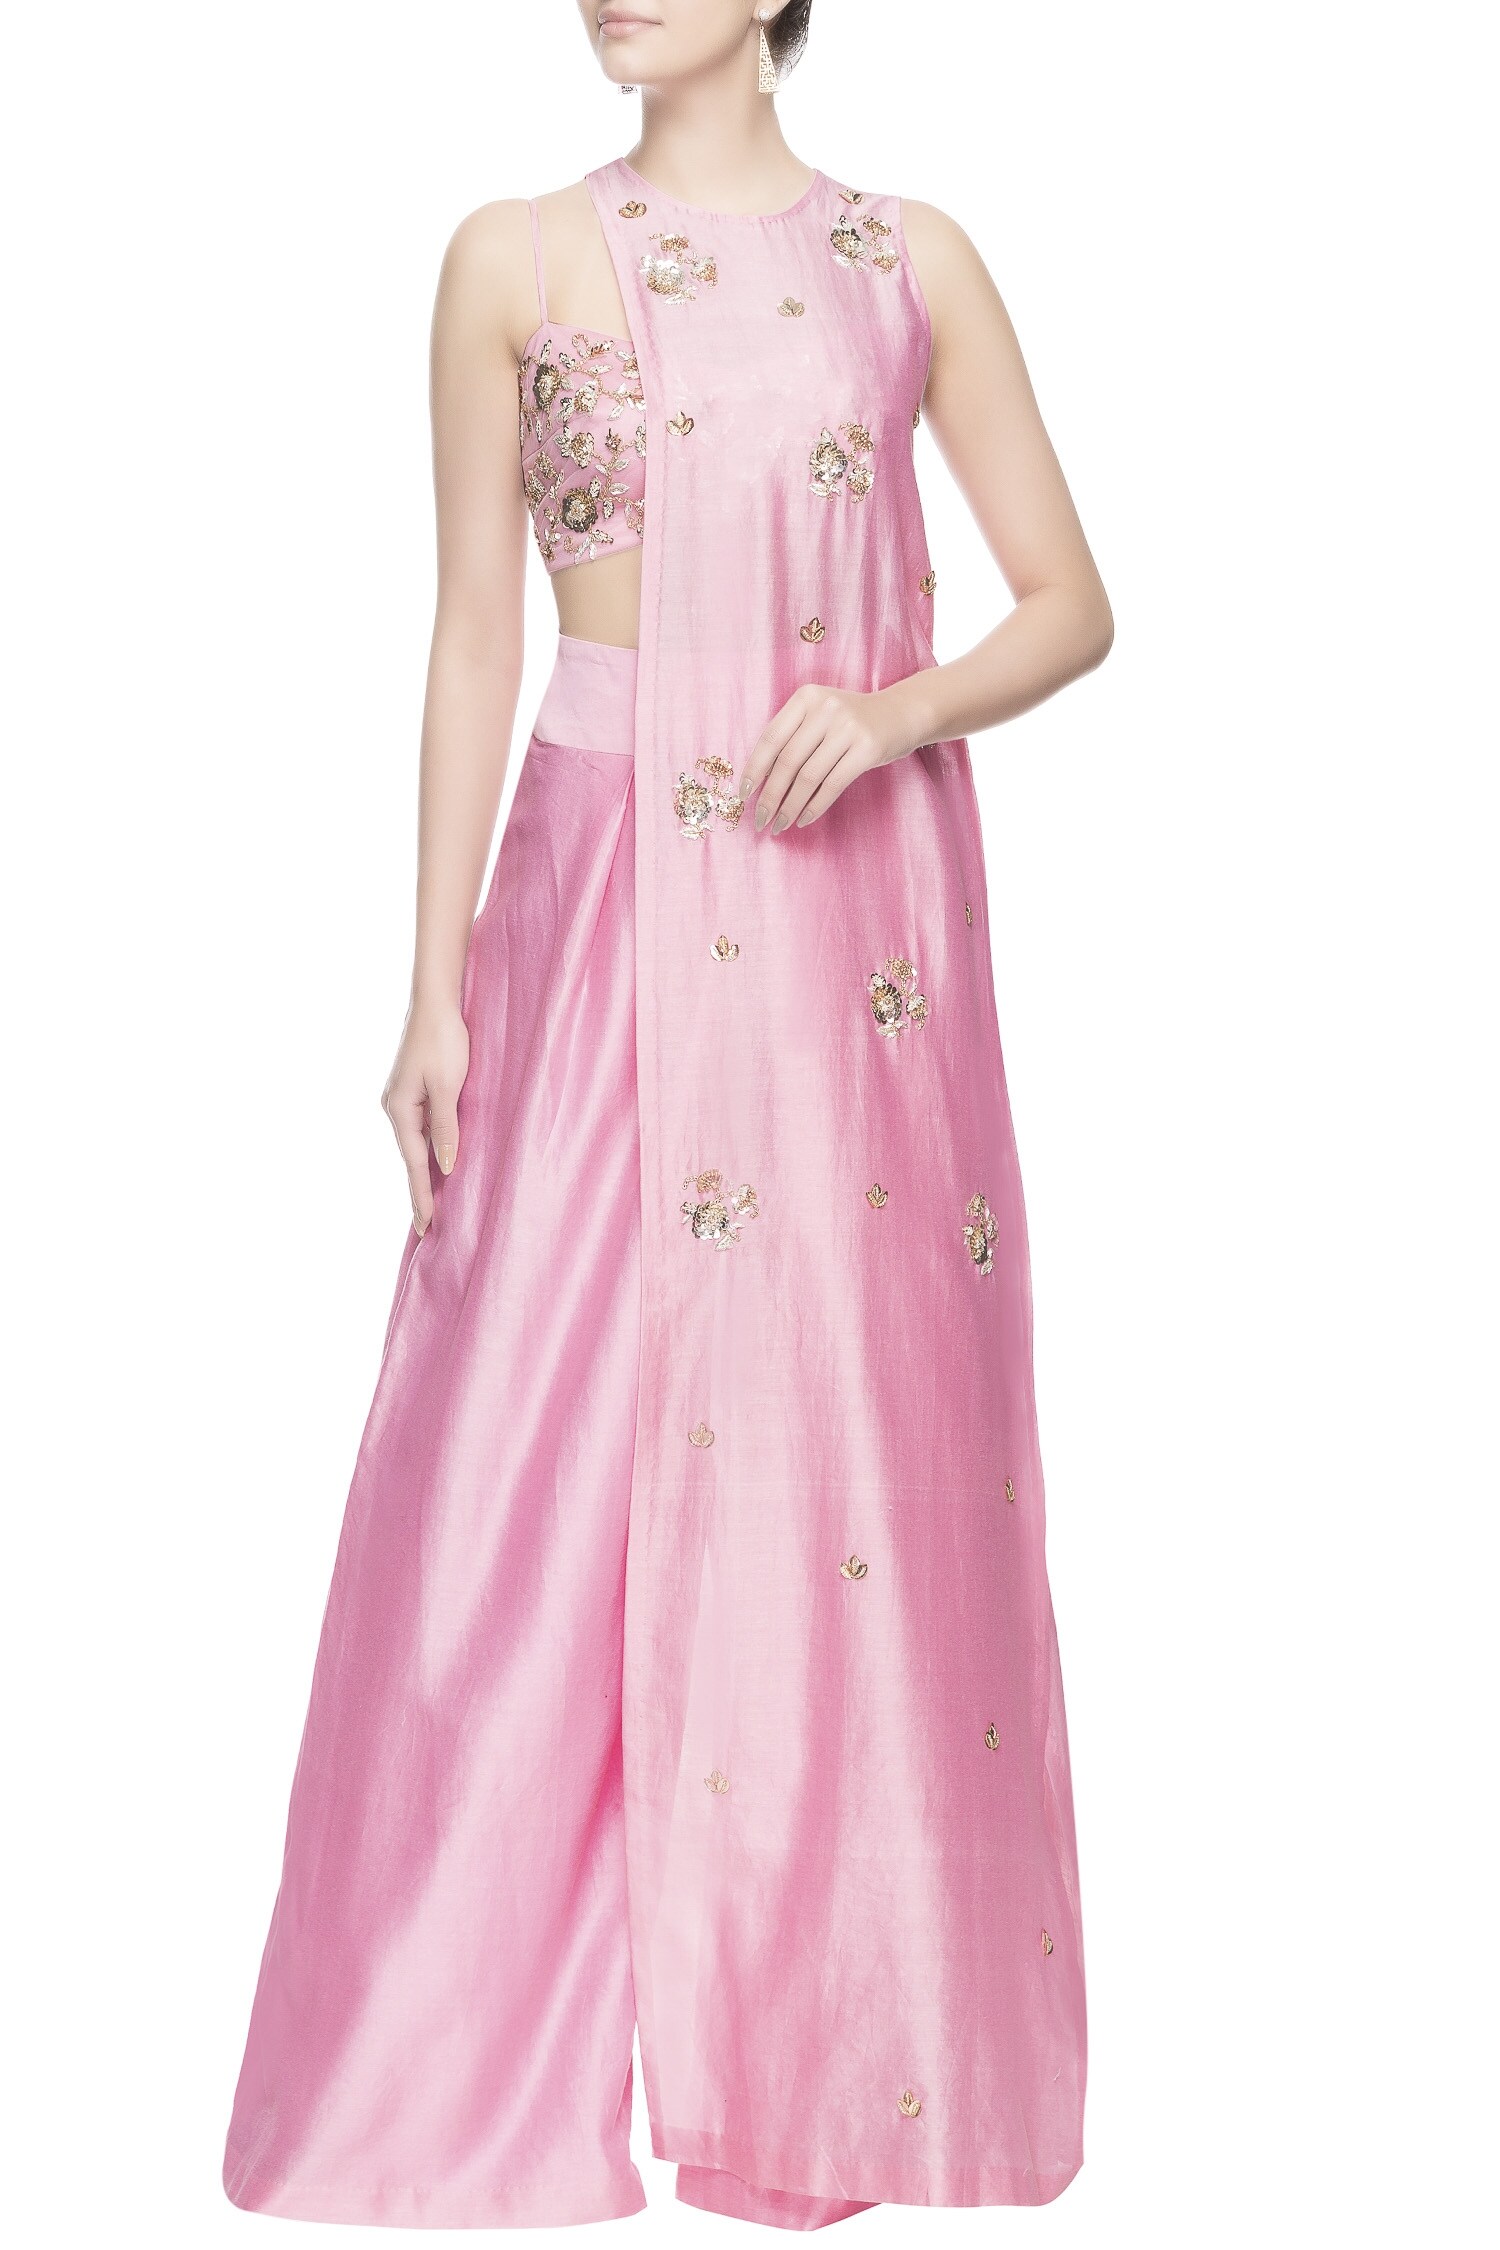 Buy Pink mukaish embroidered kurta set by Ohaila Khan at Aza Fashions